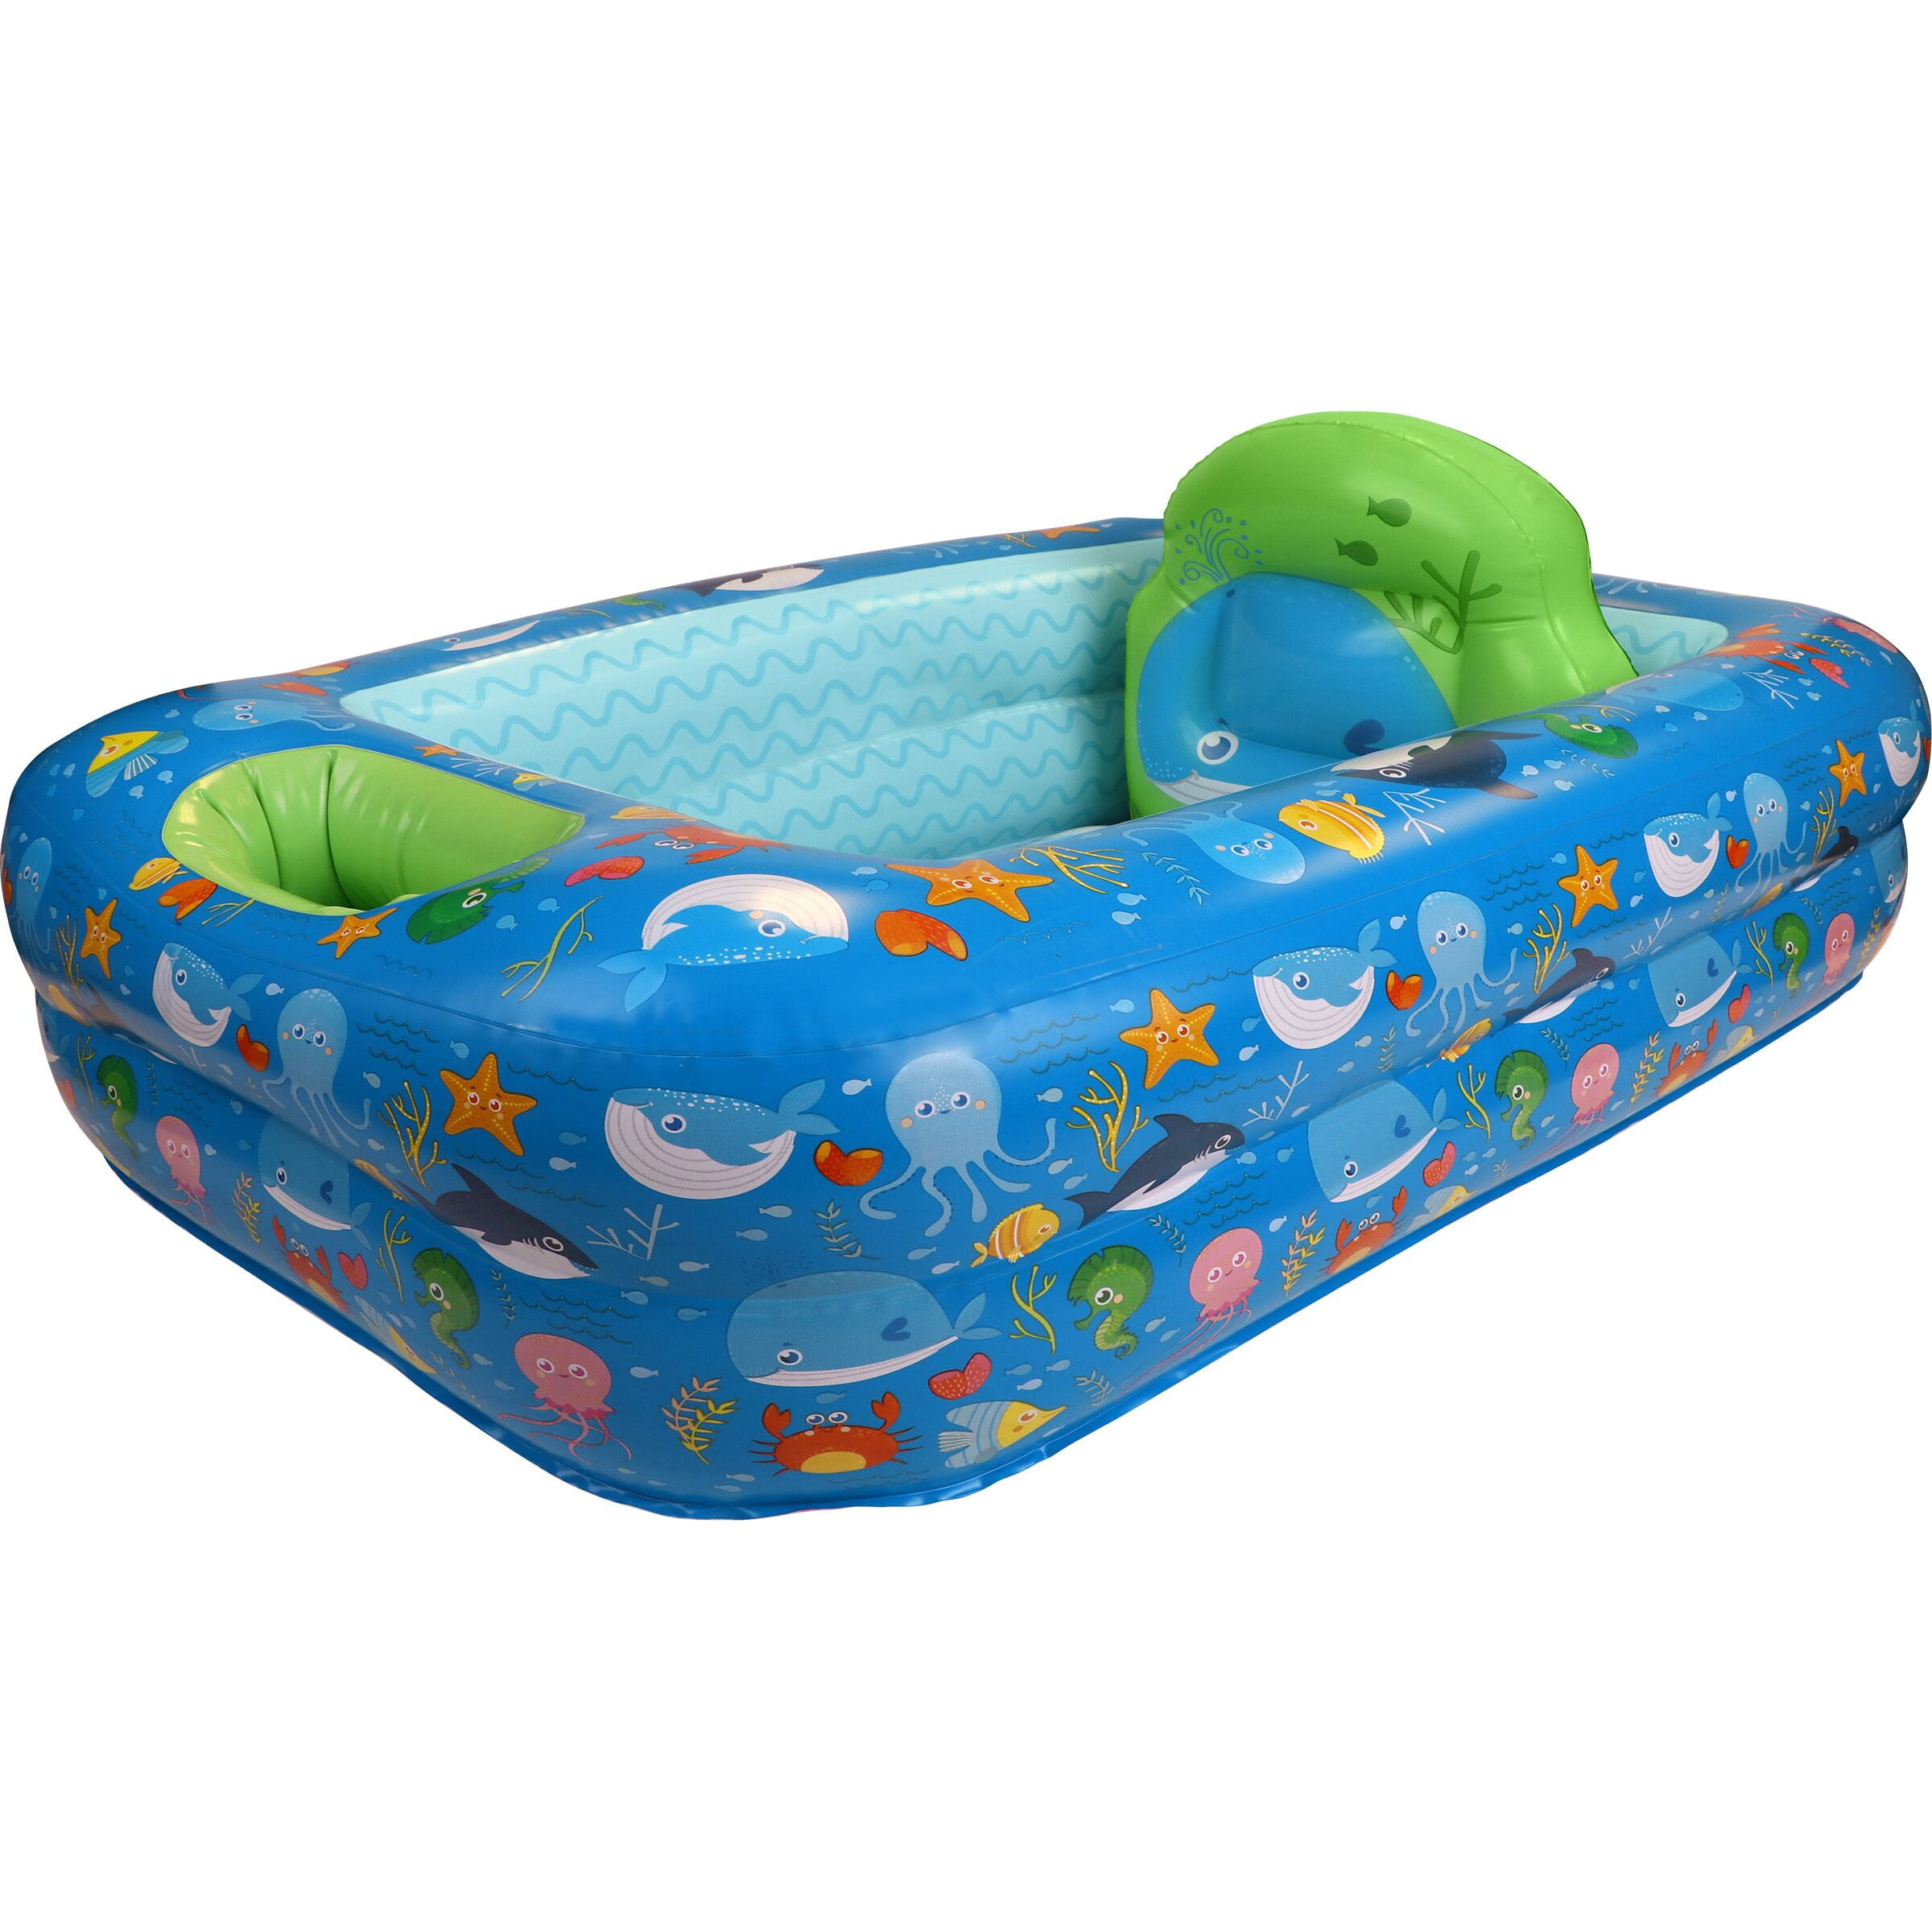 Parent's Choice Inflatable Safety Bathtub - Walmart.com ...